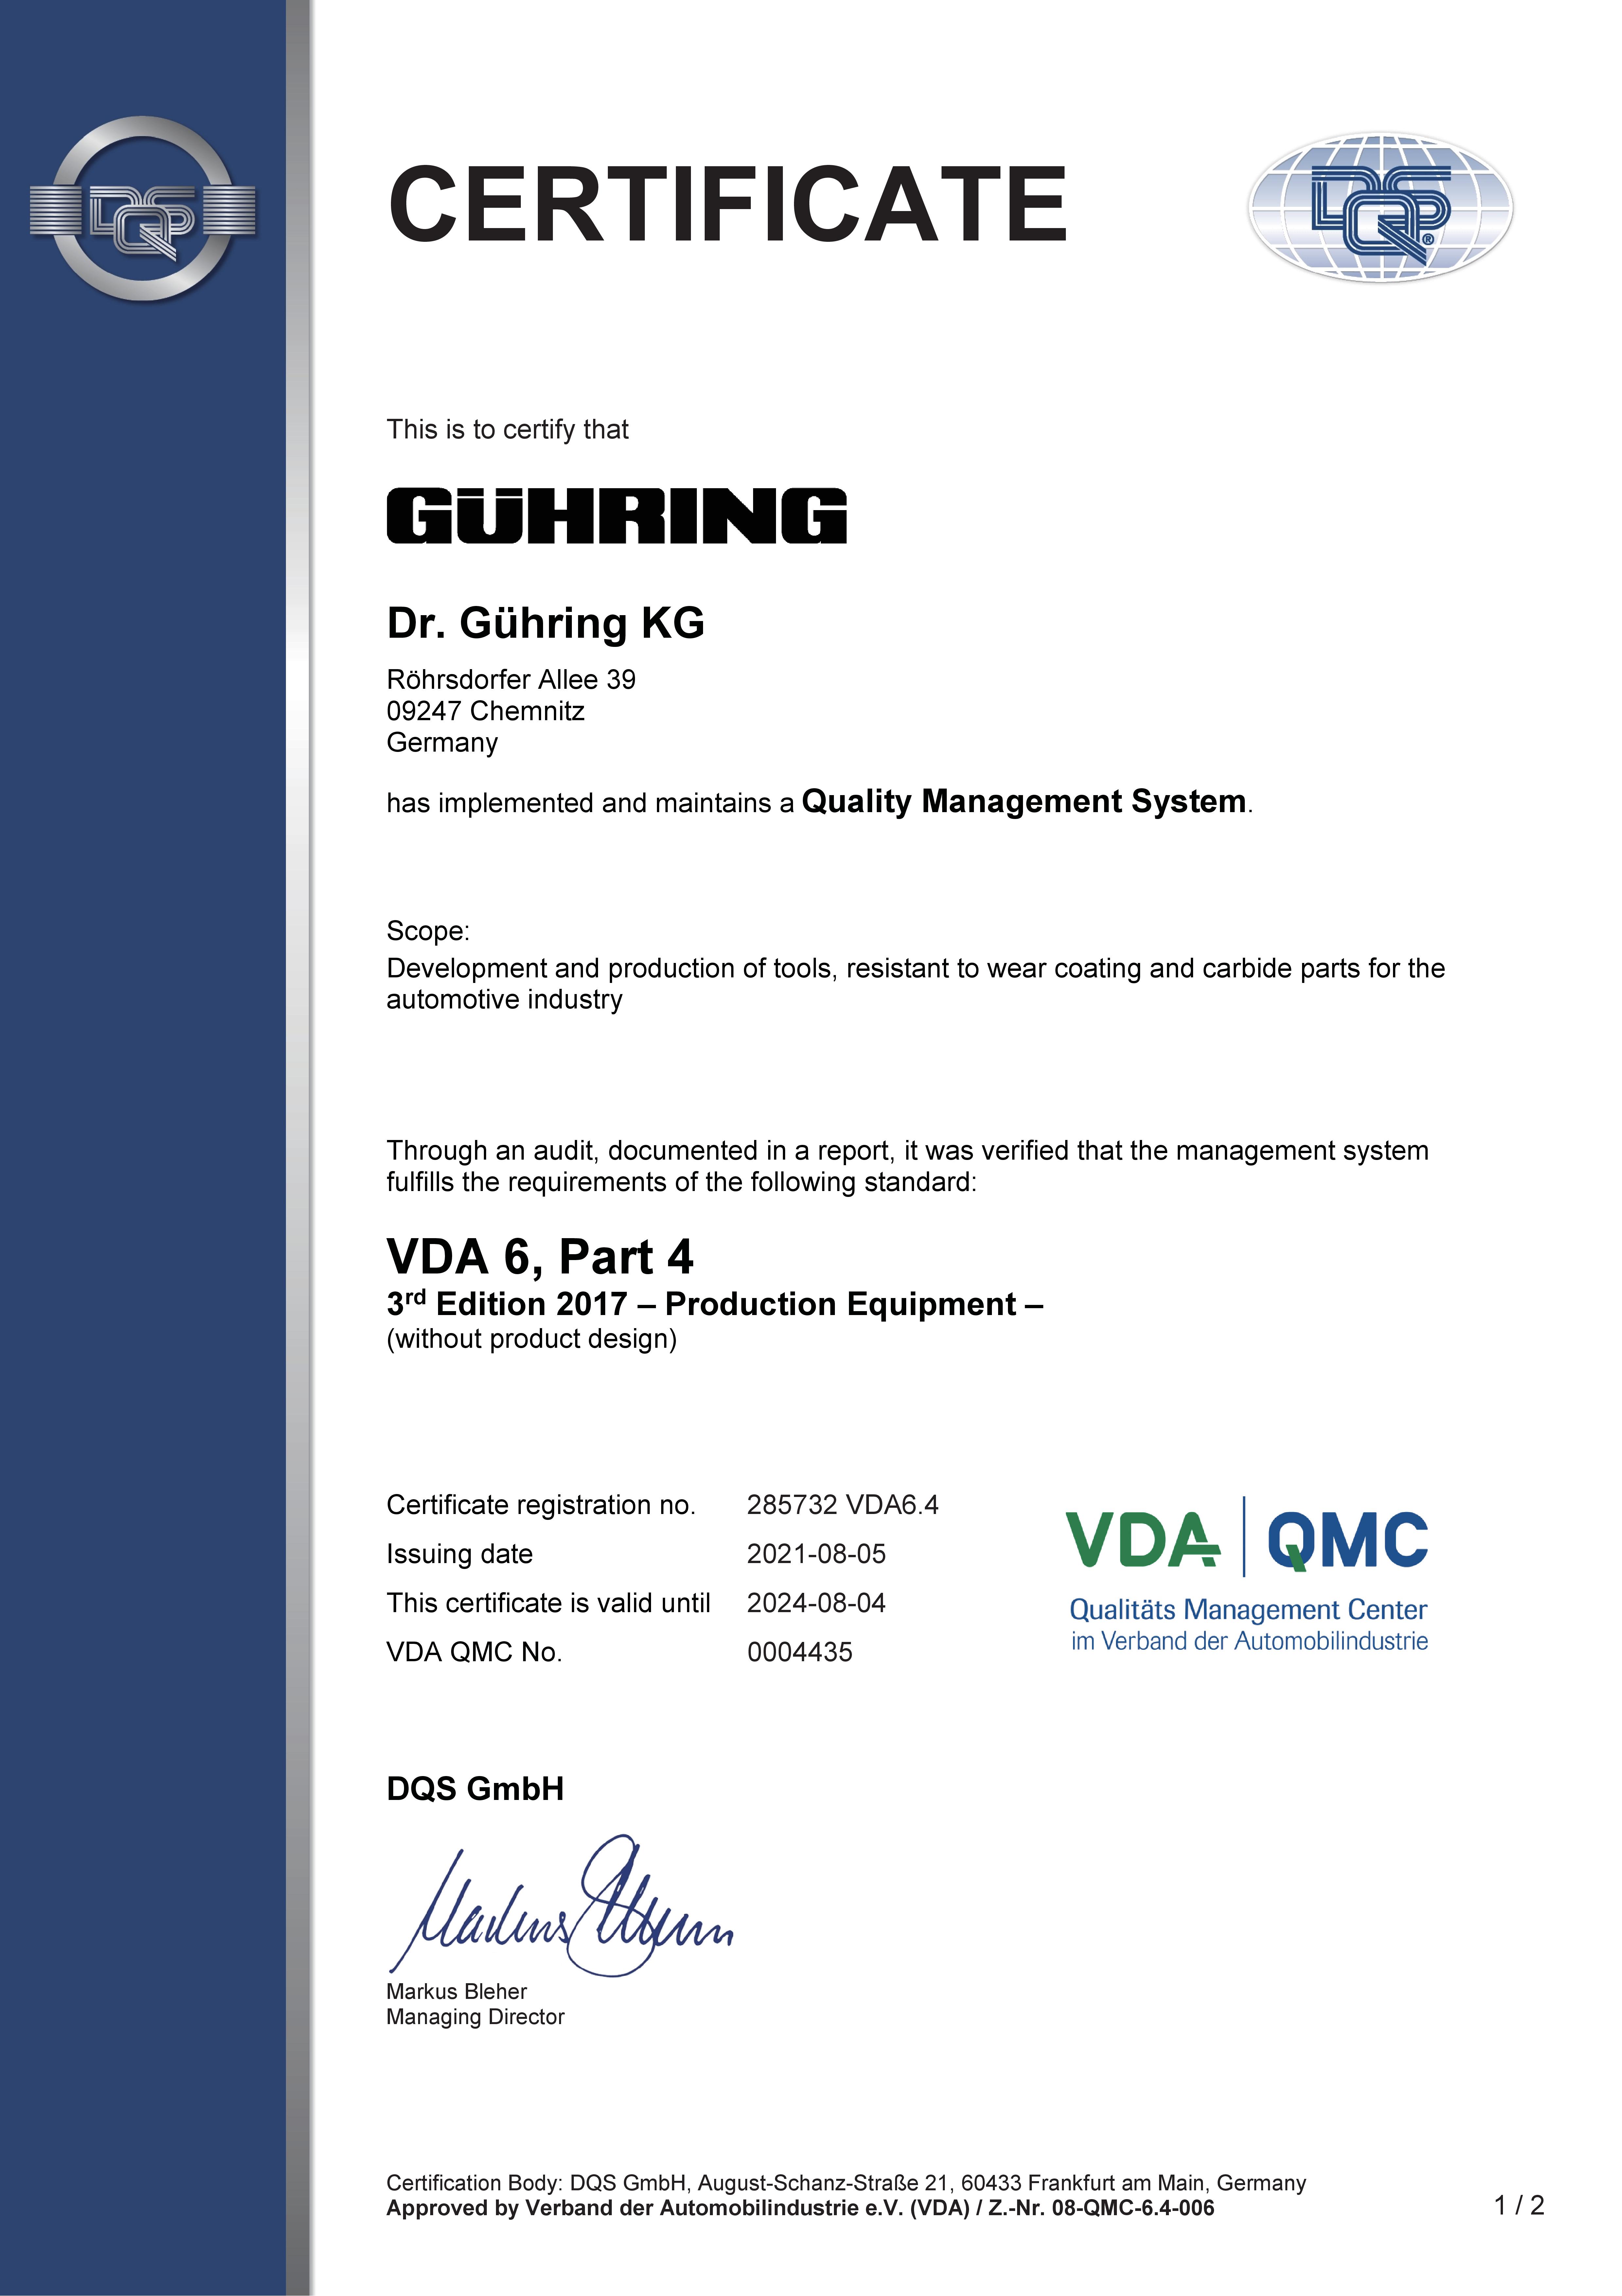 Certificate_VDA6, Part4